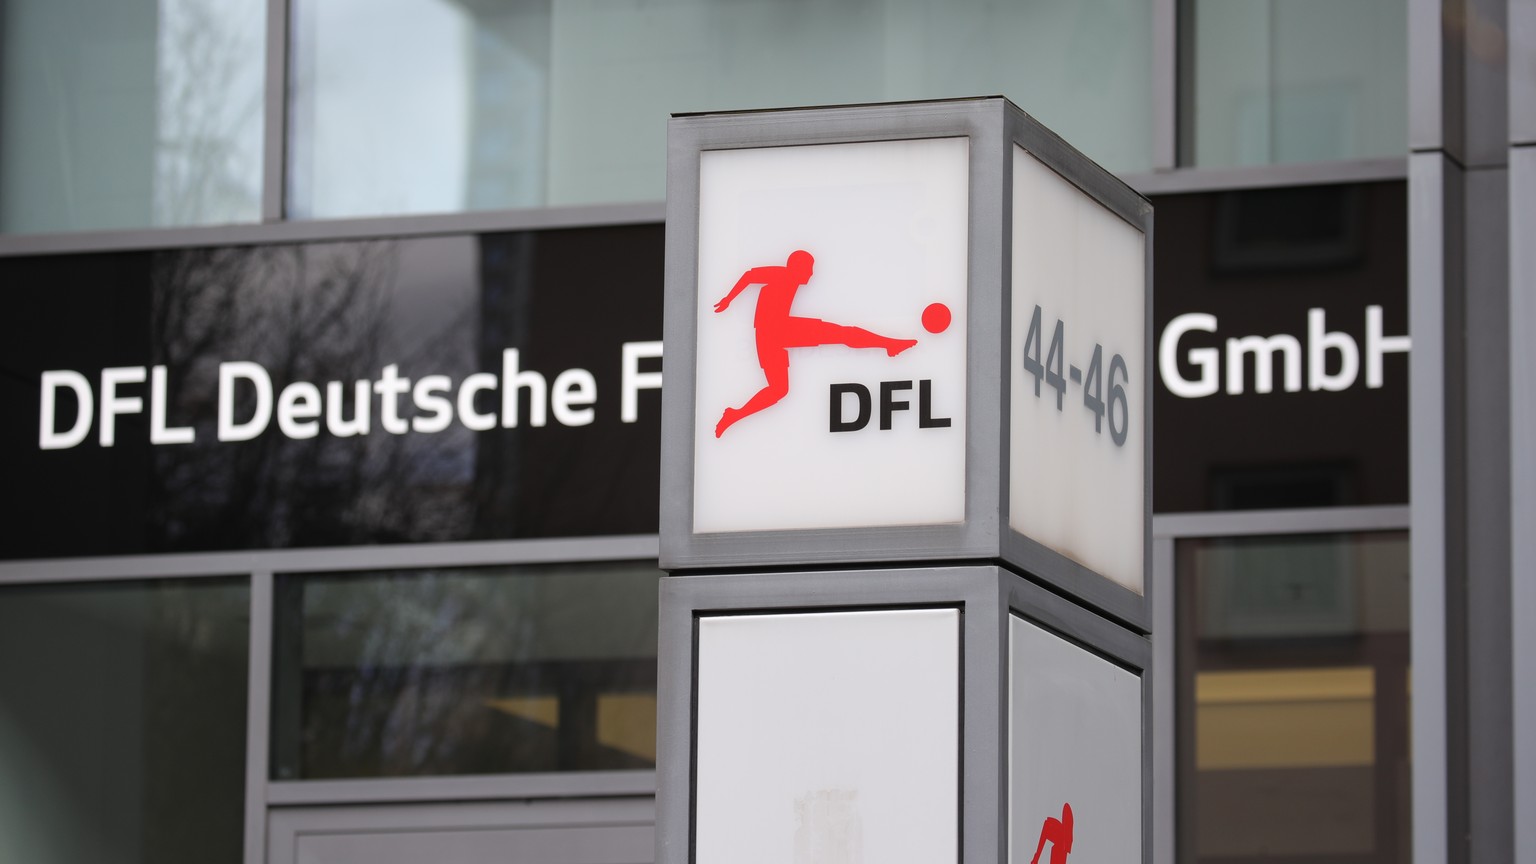 epa08291562 A general view of the entrance of German Football Association DFL (Deutsche Fussbal Liga) in Frankfurt Main, Germany, 13 March 2020. According to reports, German Football Association suspe ...